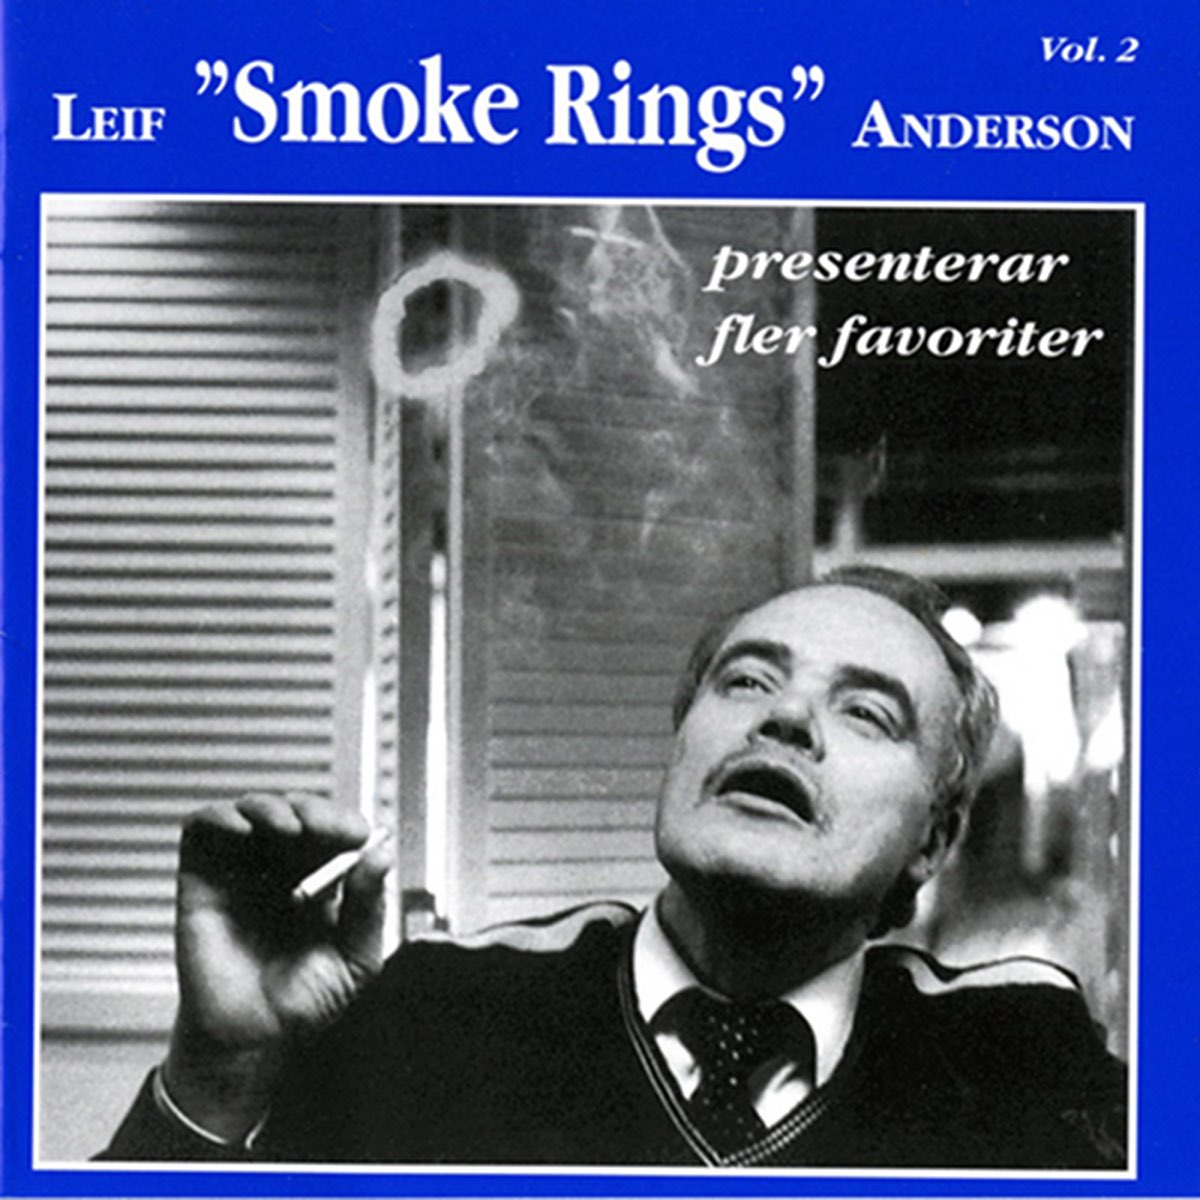 Leif "Smoke Rings" Anderson presenterar fler favoriter - Album by Leif "Smoke  Rings" Anderson - Apple Music